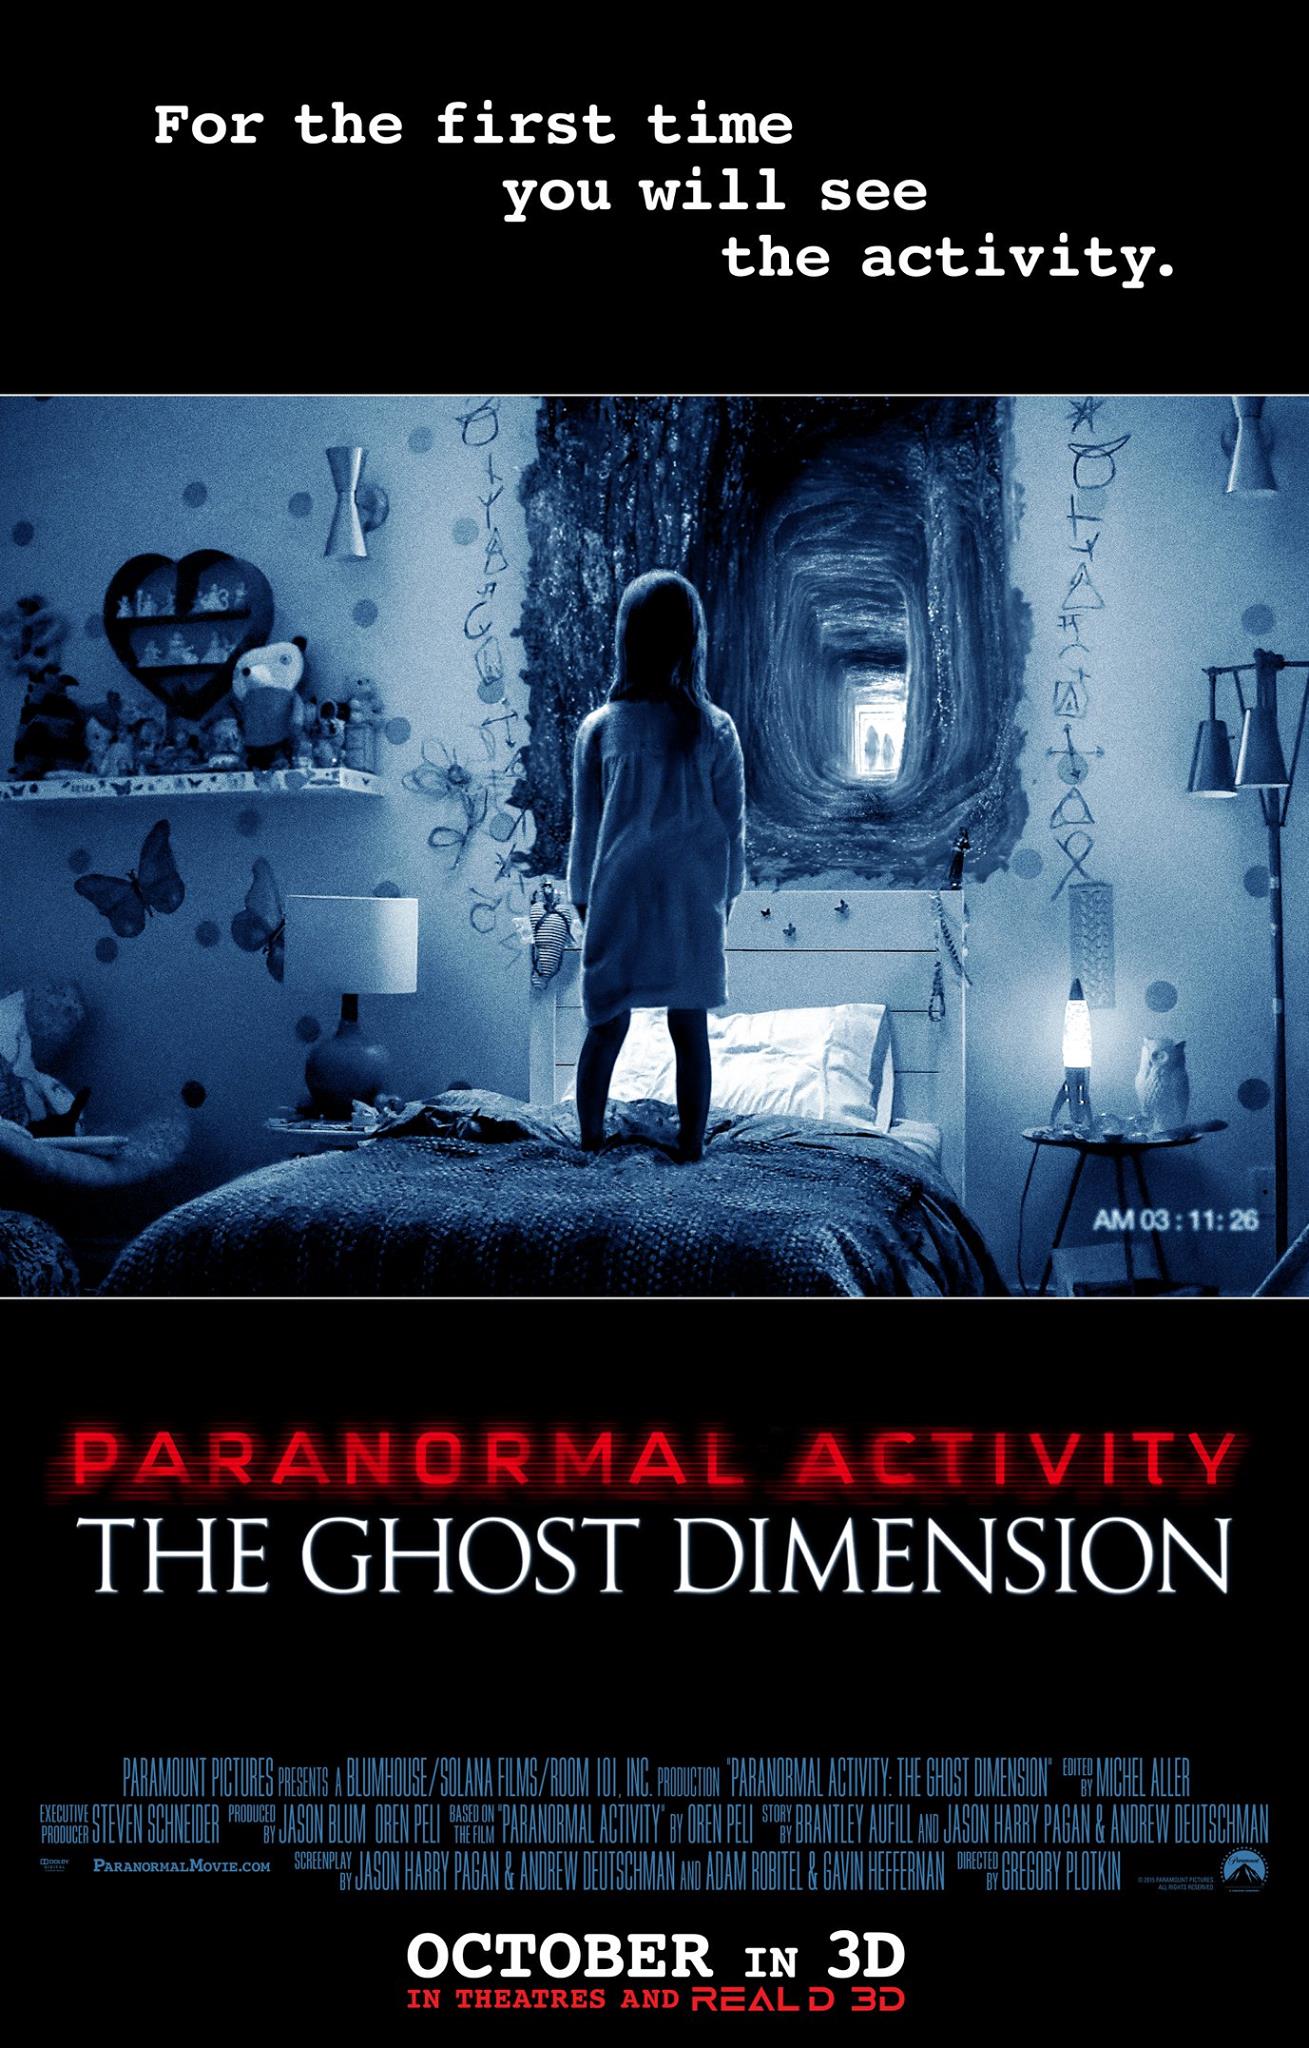 Paranormal Activity - Oren Peli interview by Pamela Price